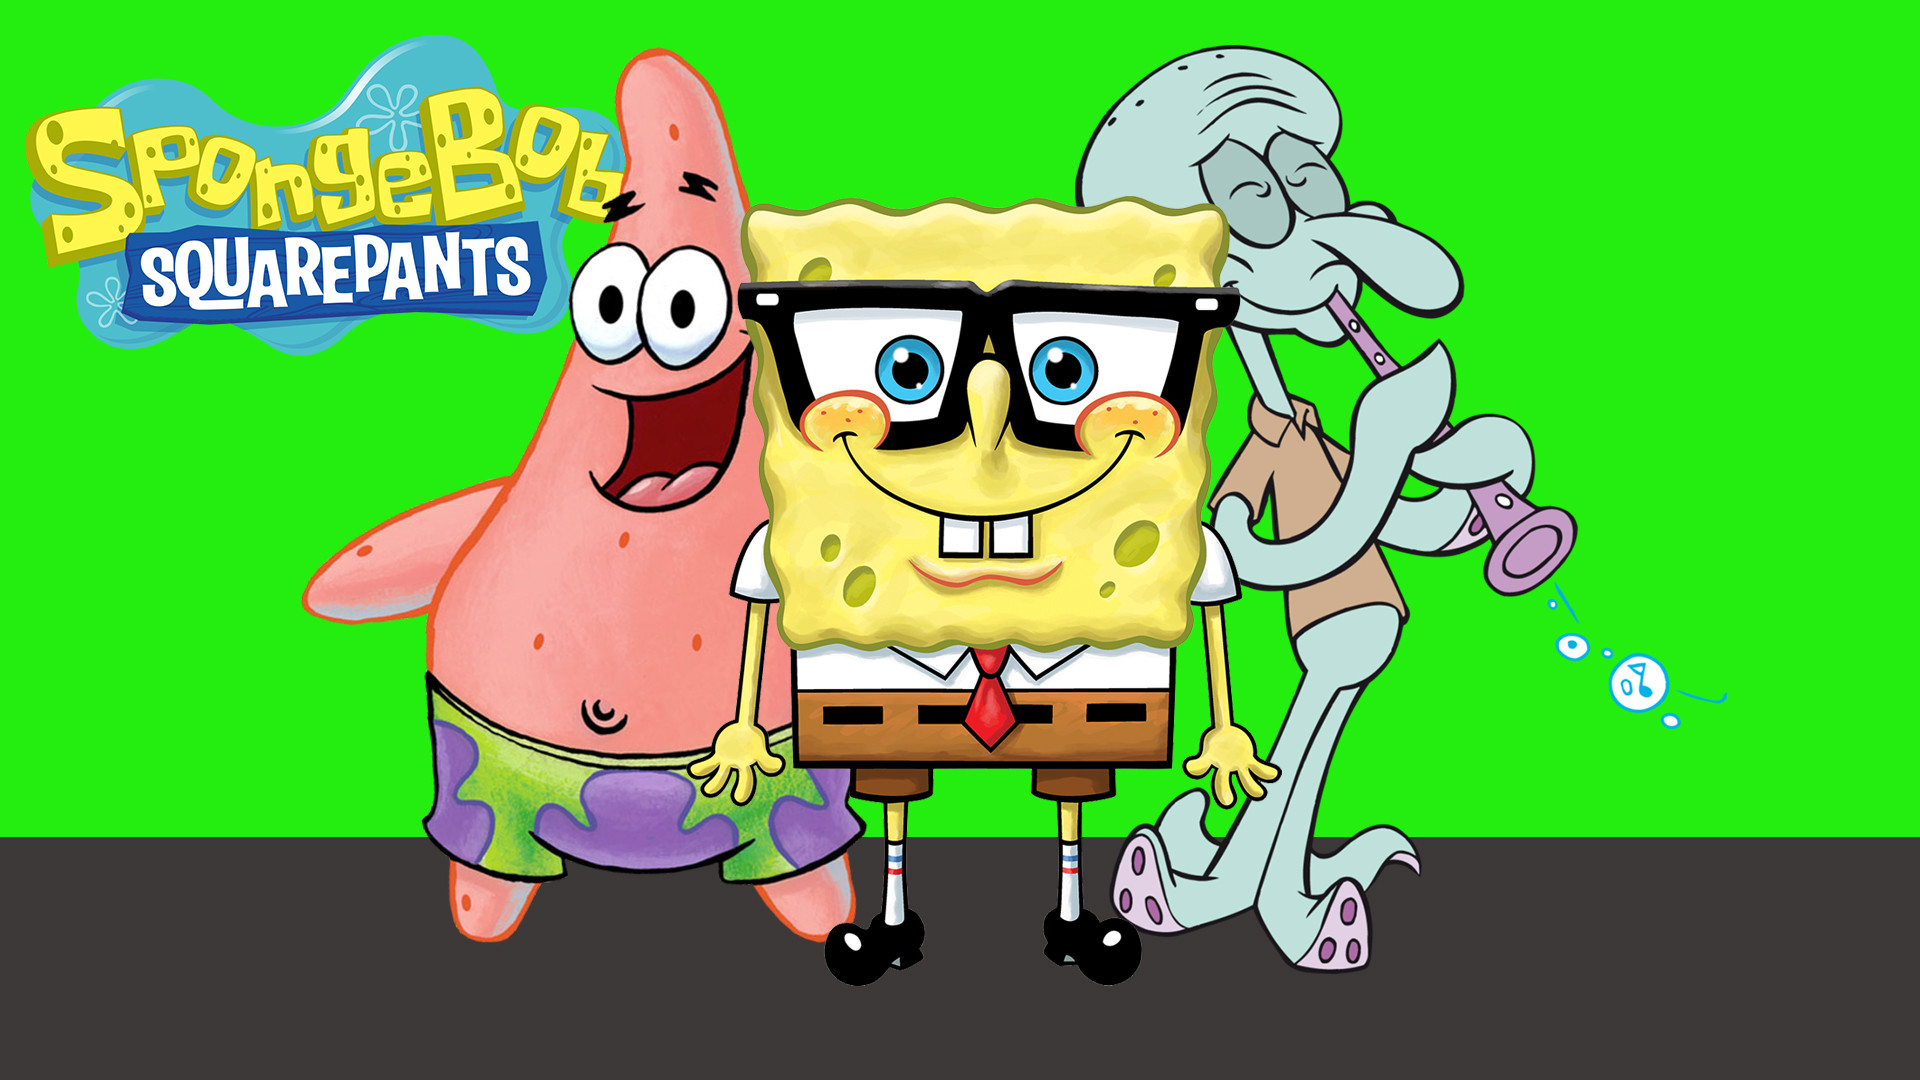 1920x1080 Spongebob Squarepants images Spongebob, Patrick and Squidward HD wallpaper  and background photos